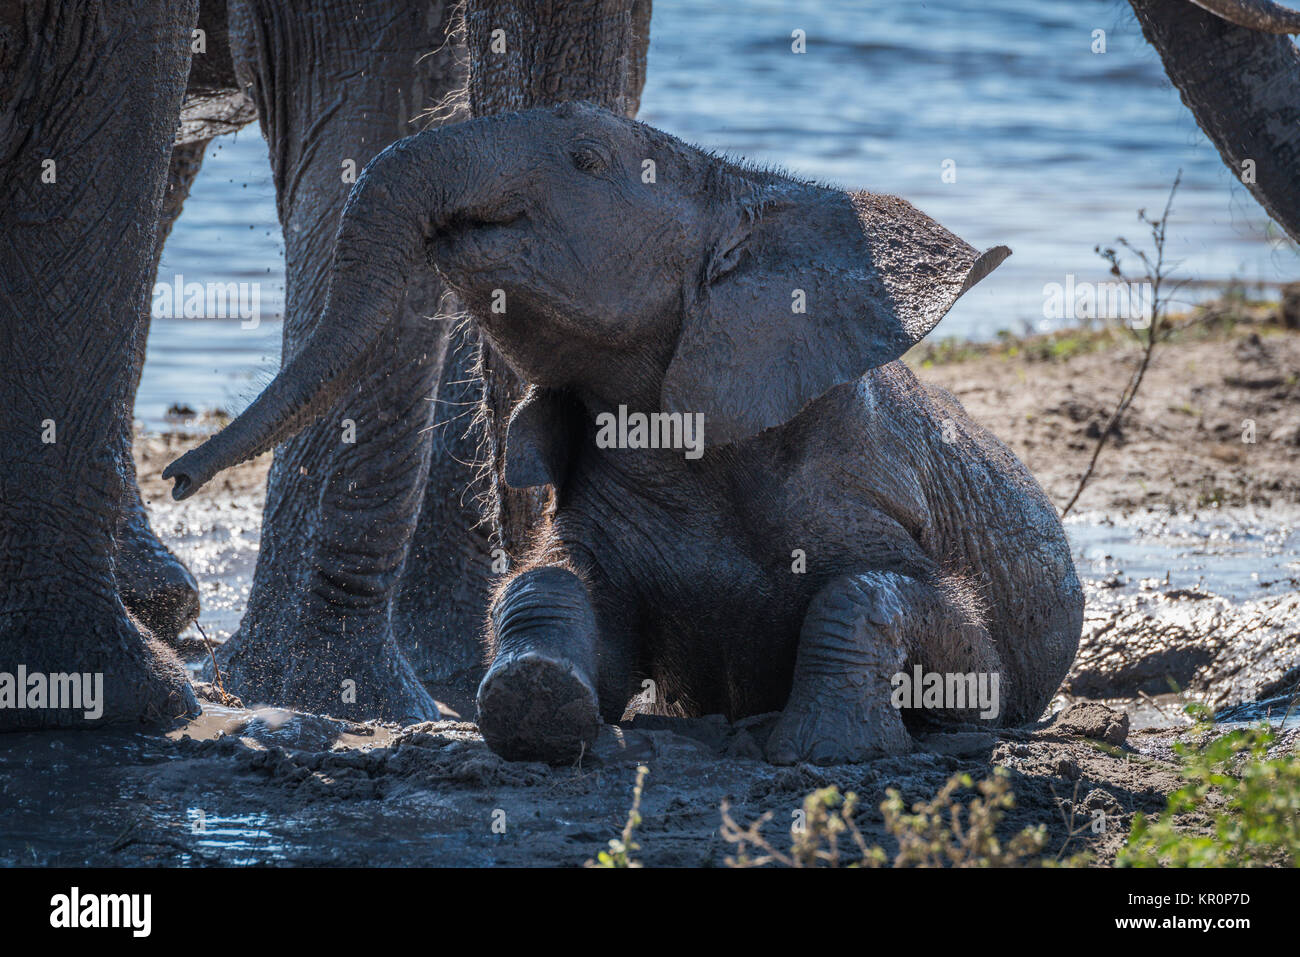 Baby elephant taking mud bath beside water Stock Photo